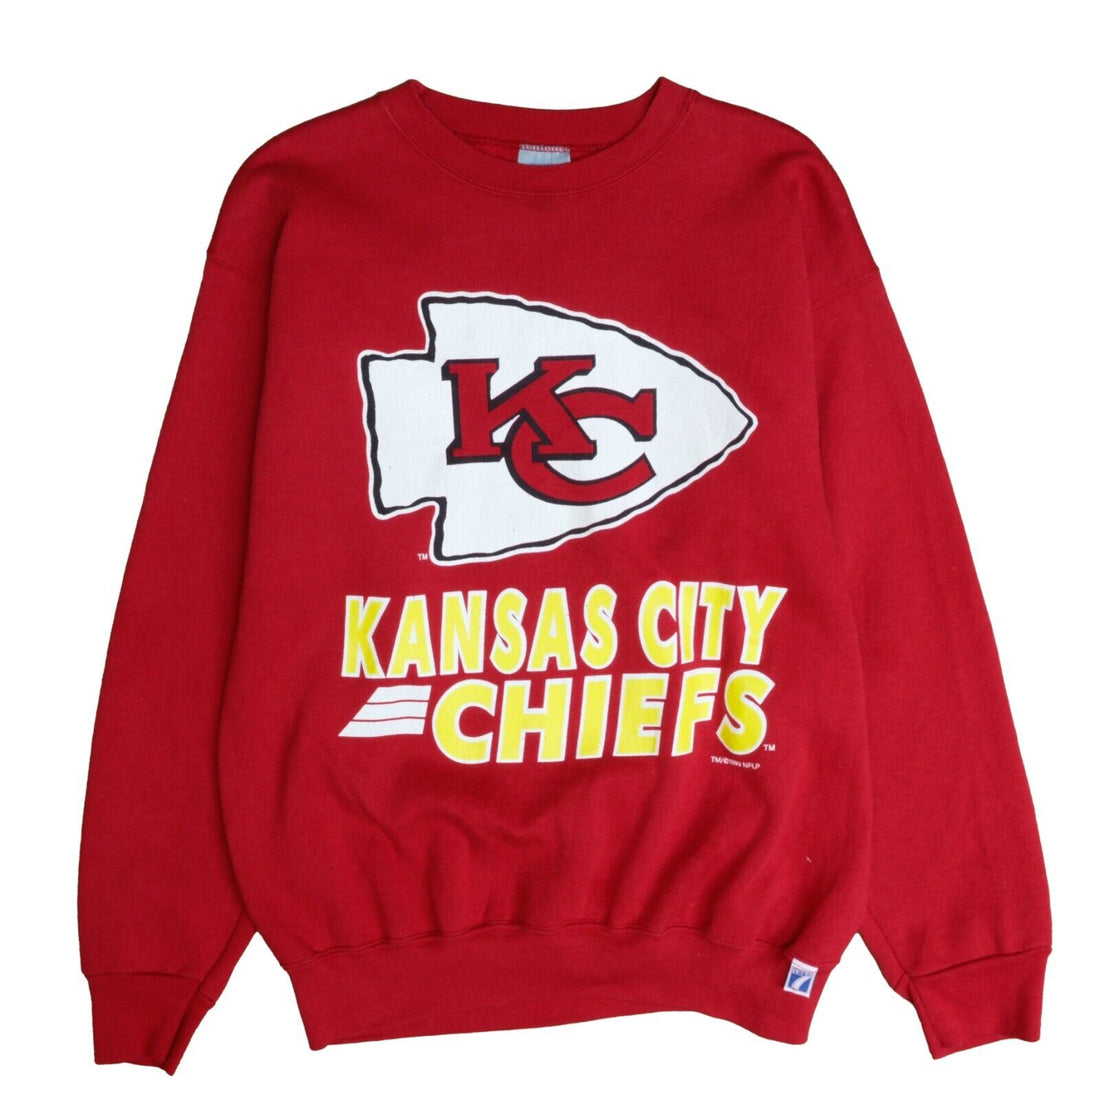 Vintage Kansas City Chiefs Sweatshirt Crewneck Size Large Red 1993 90s NFL